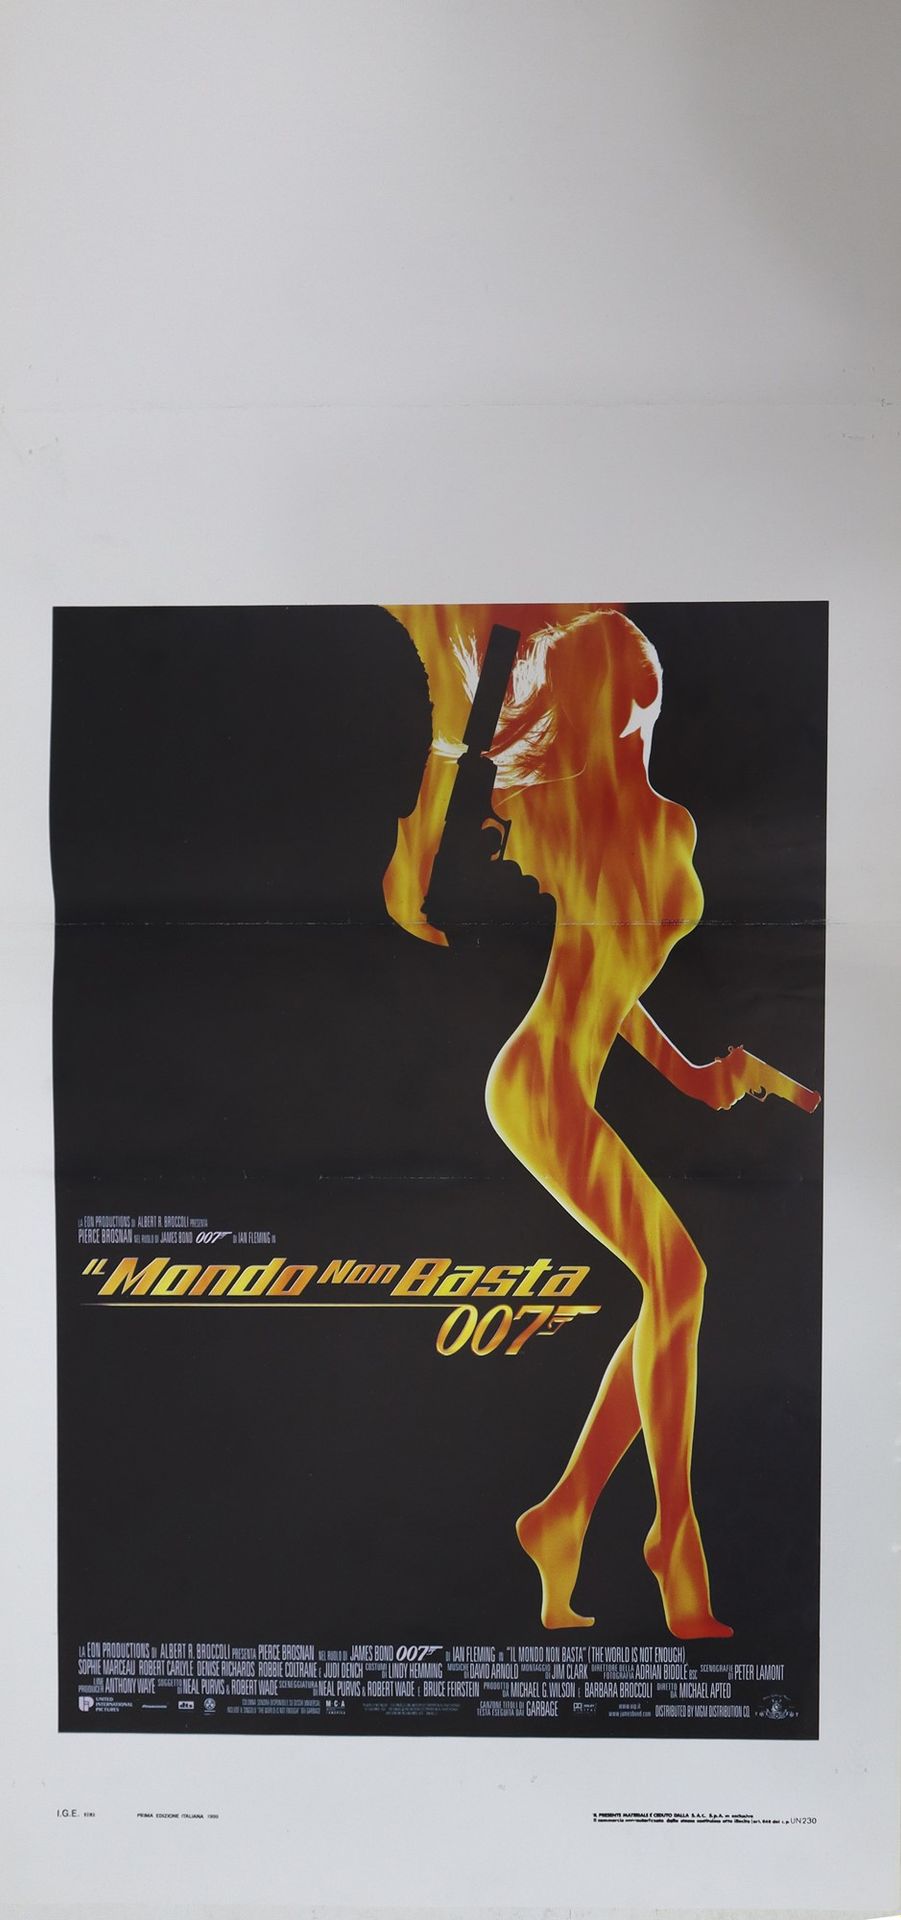 Null 电影海报 "007，世界是不够的"，1999年，70厘米×33厘米，意大利第一版，使用痕迹正常，日期在左下方。